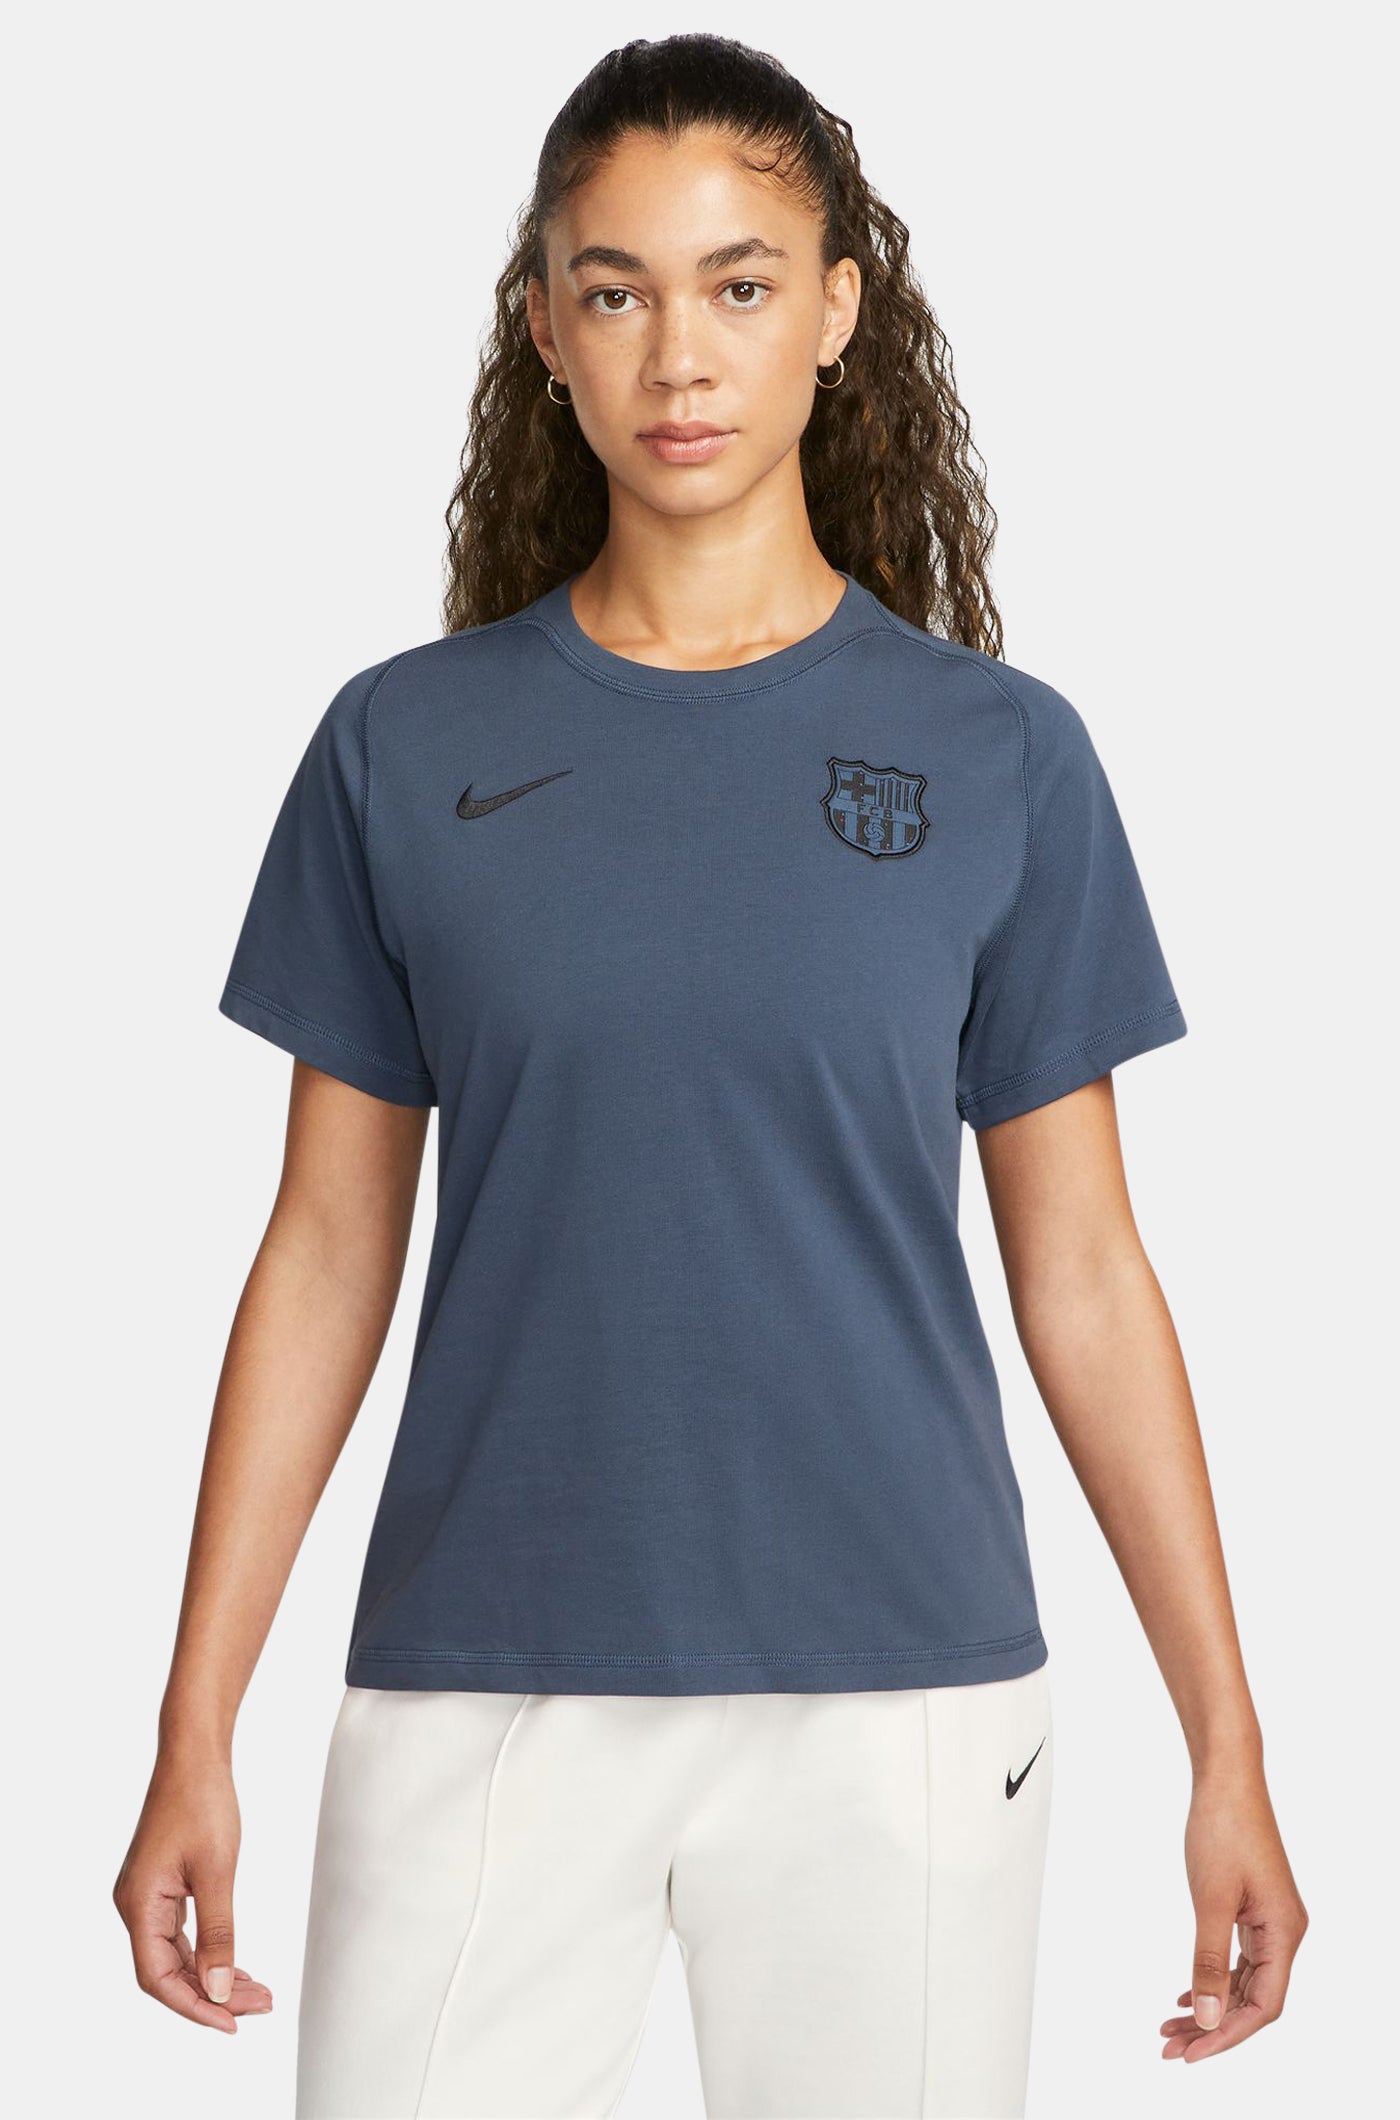 Nike dark lue sports shirt for men - price 25€